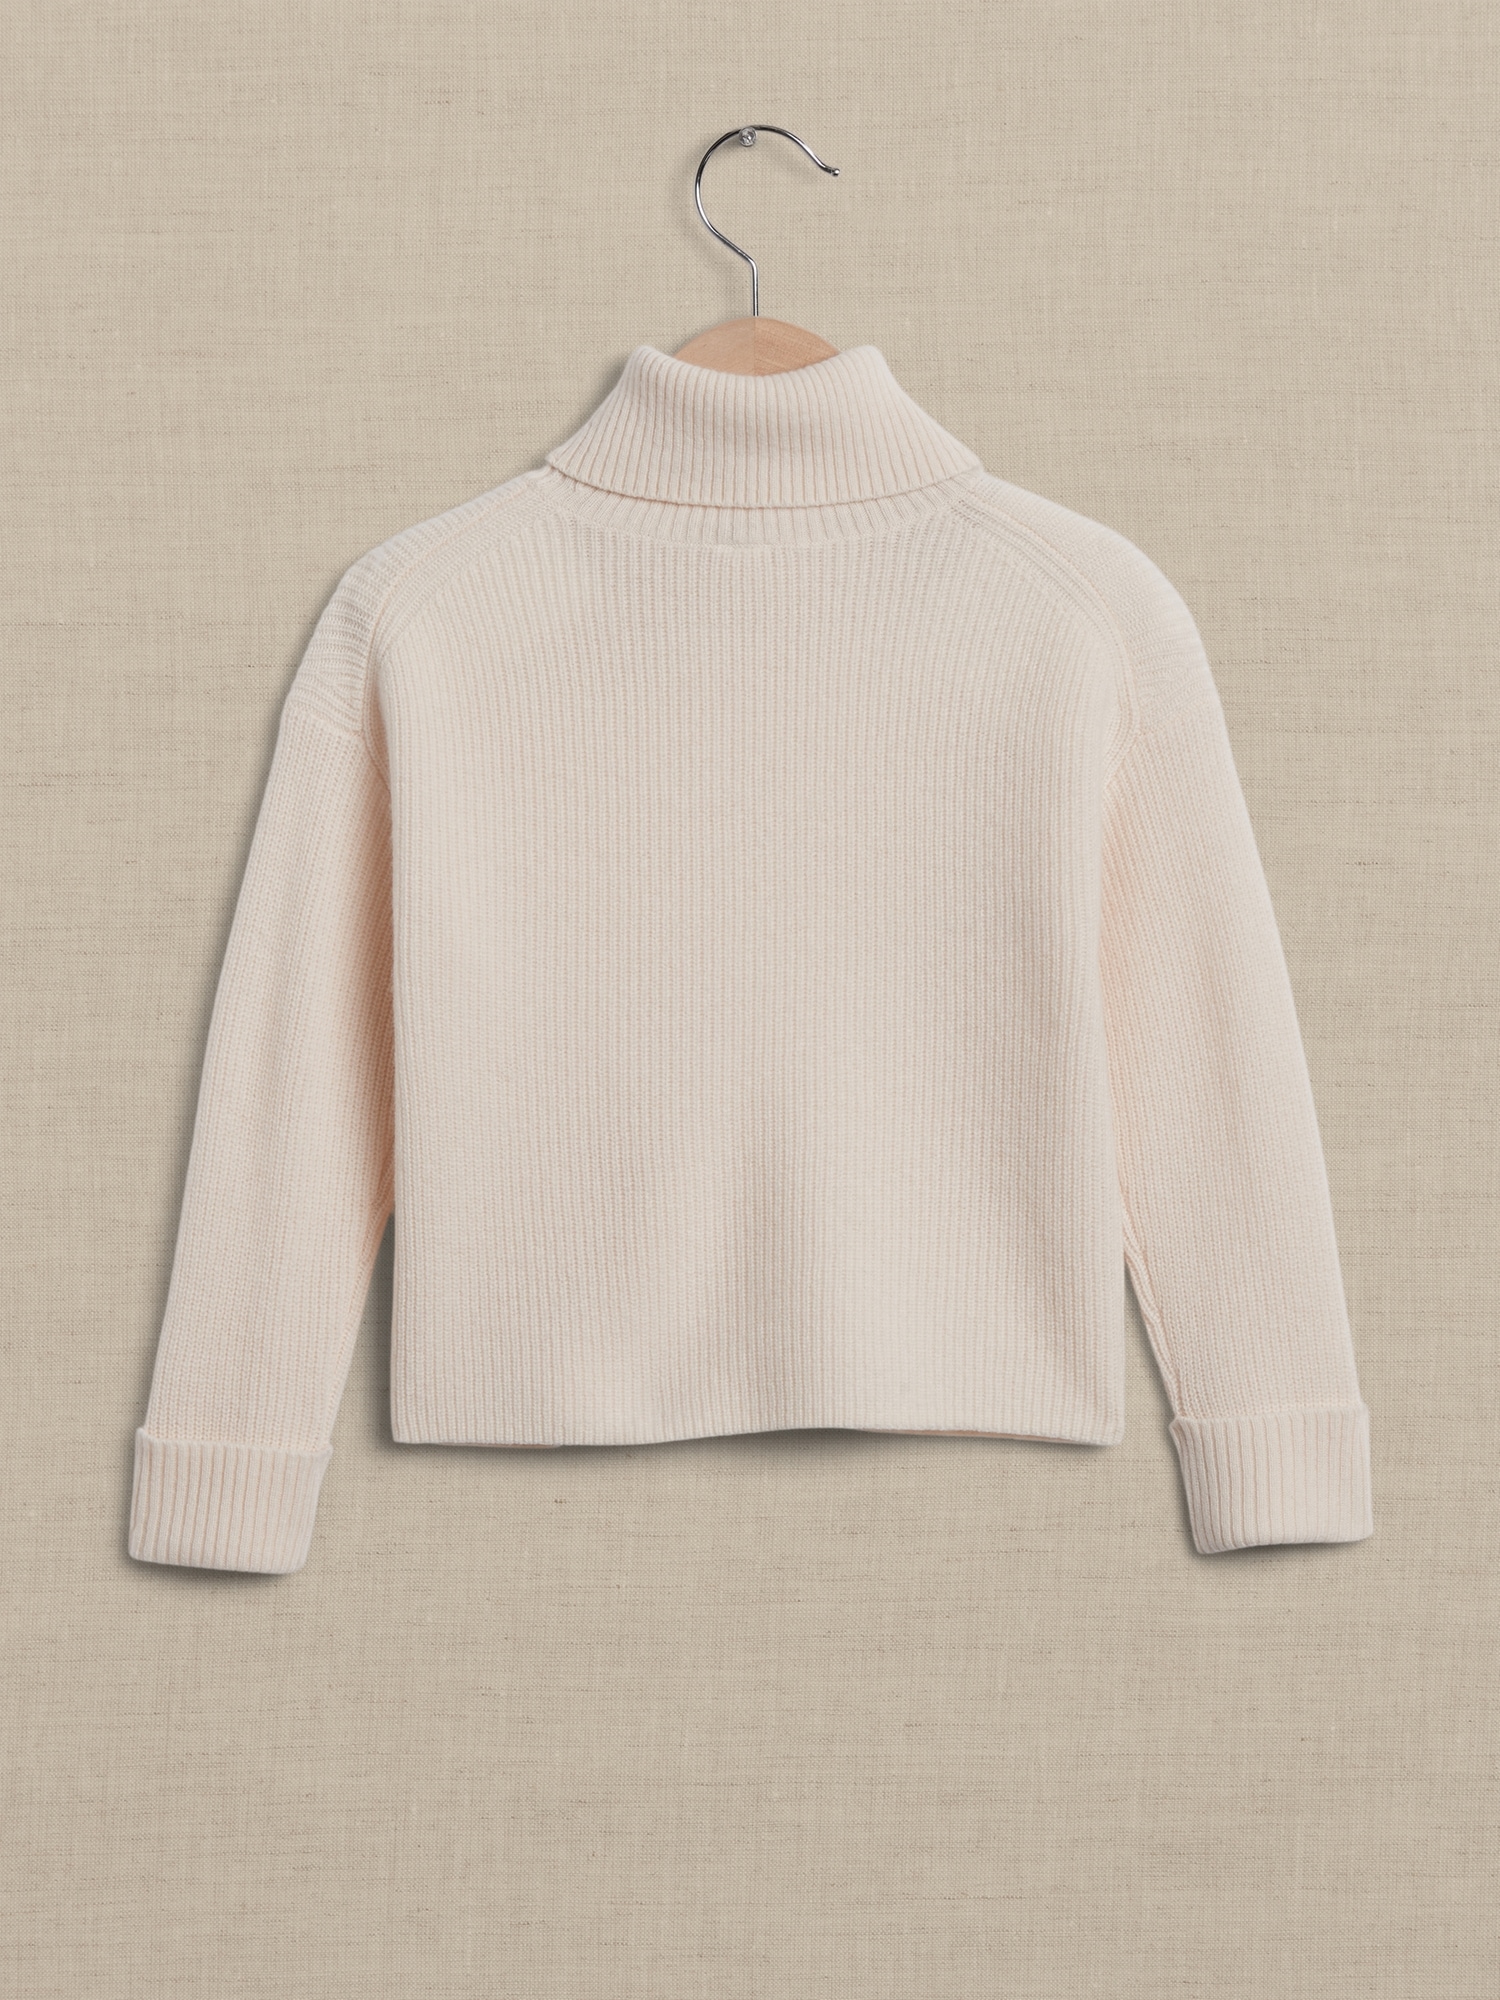 Chiara Cashmere Turtleneck Sweater for Toddler